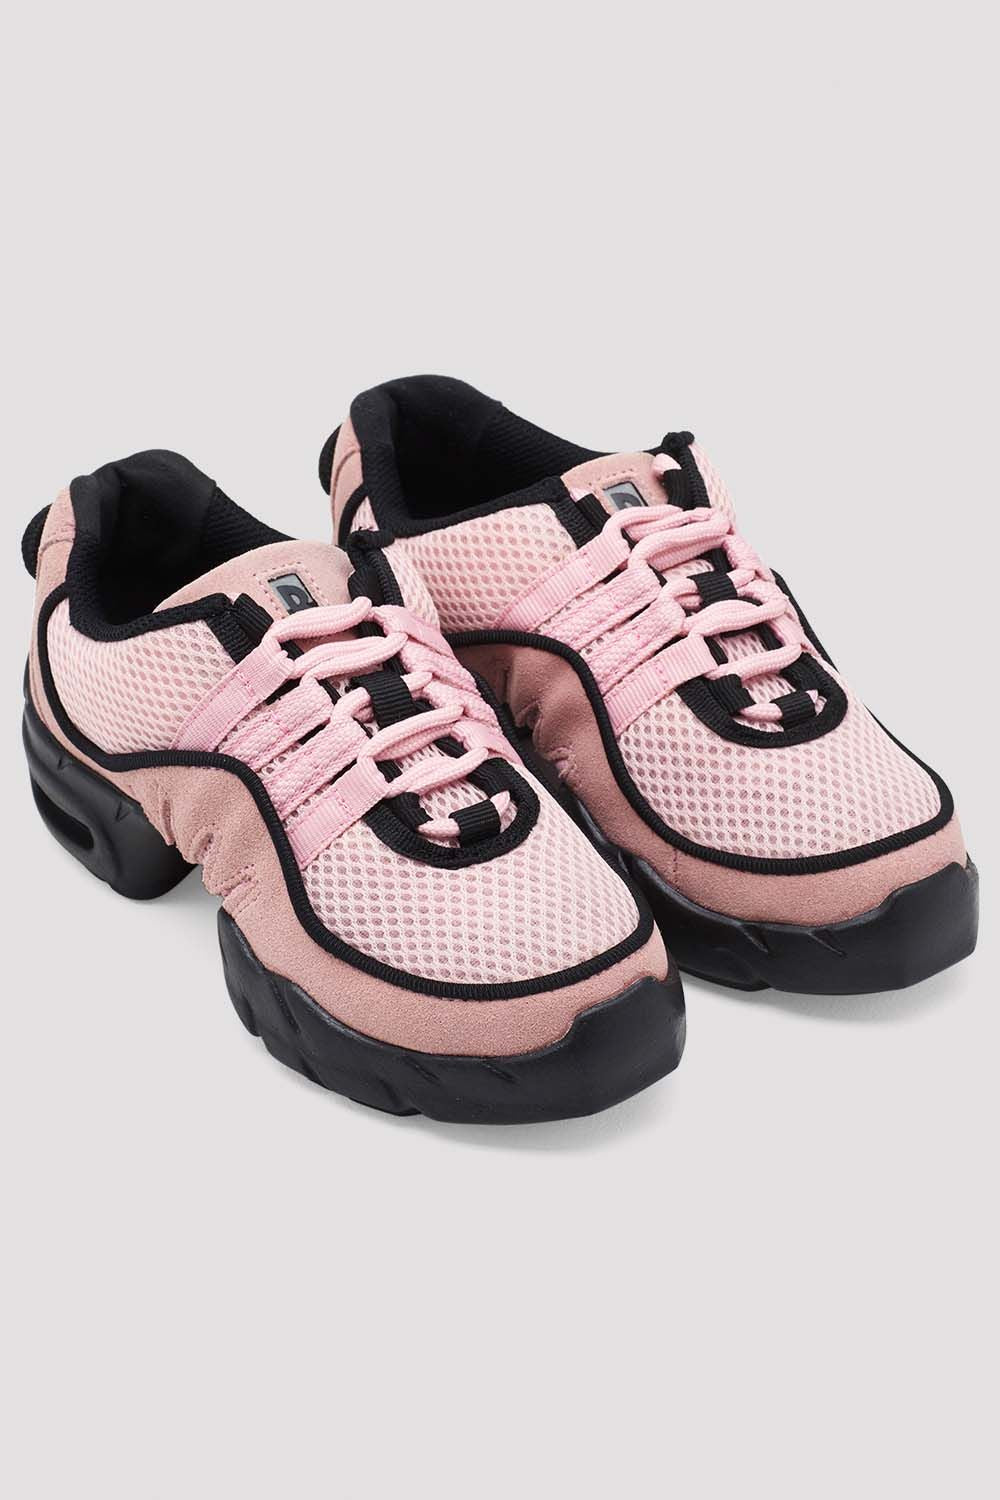 Adult Mesh Sole Dance Sneakers, Pink BLOCH US